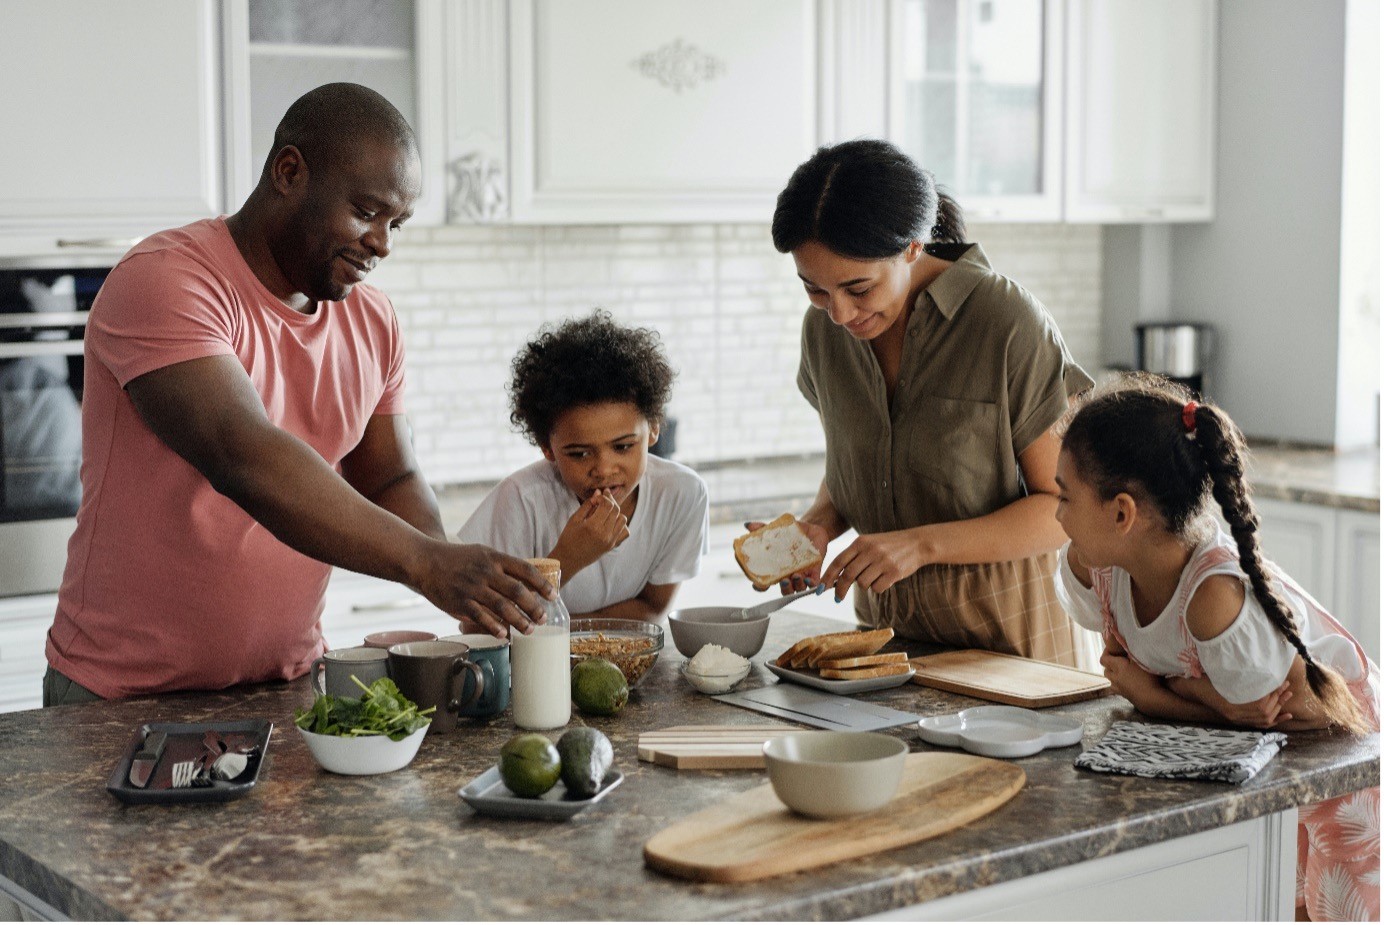 Kitchen habits that impact children's health